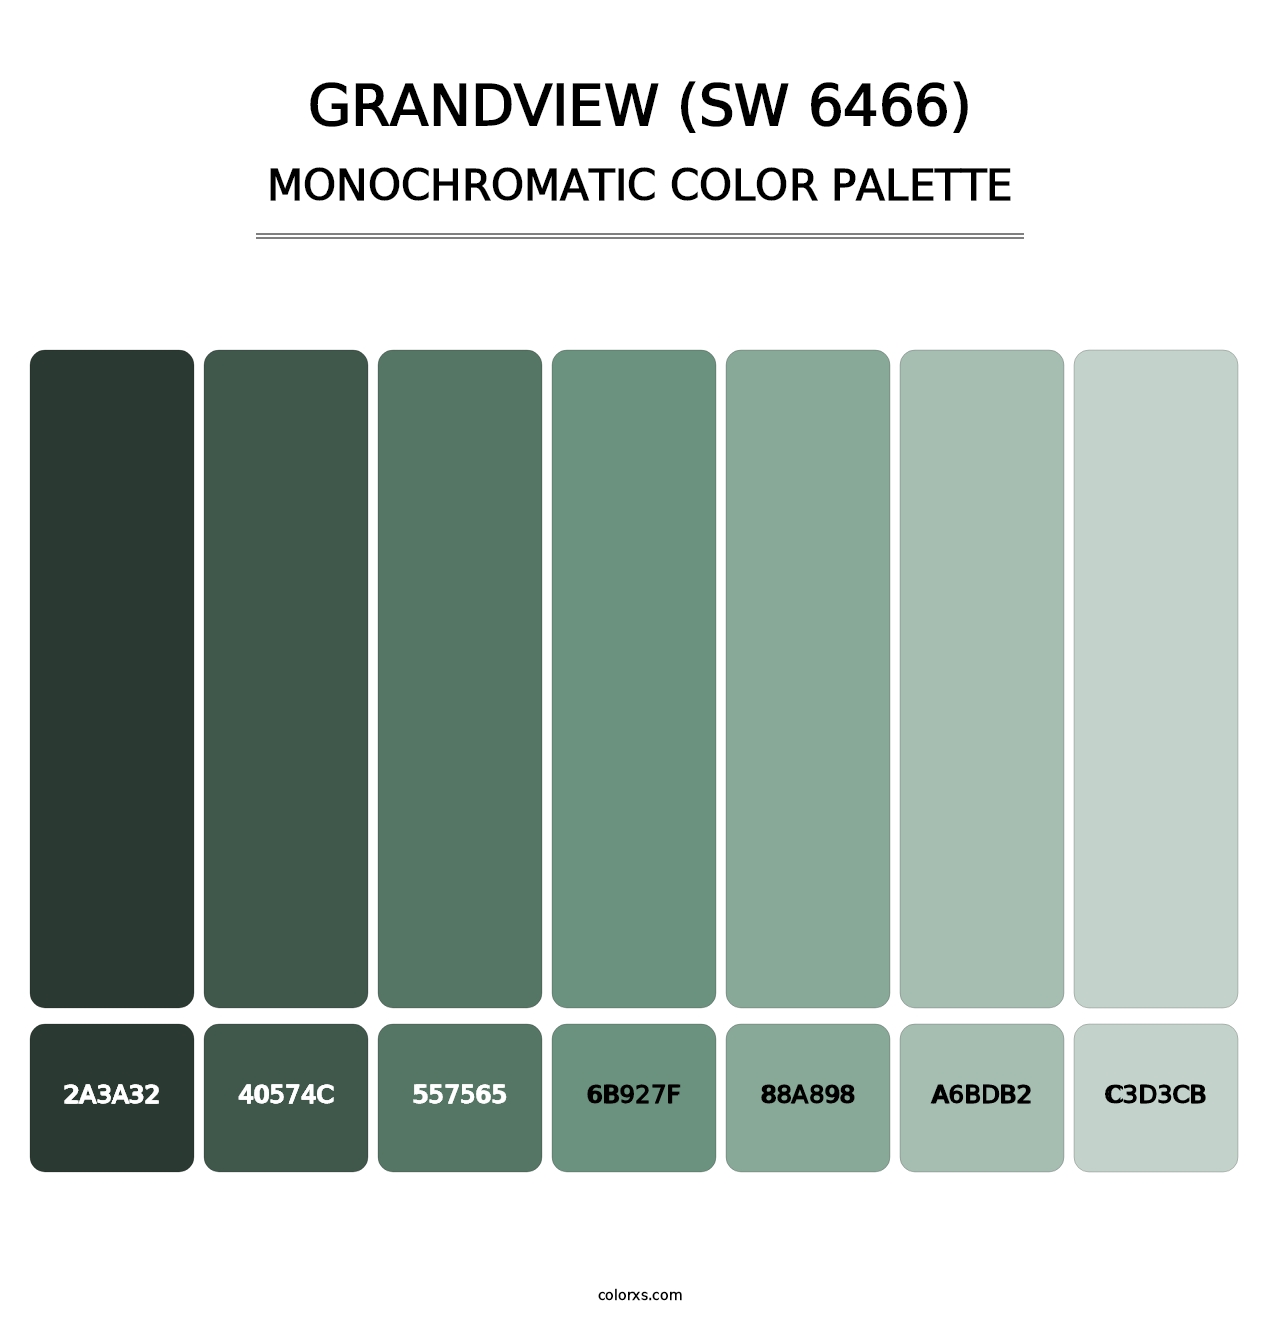 Grandview (SW 6466) - Monochromatic Color Palette